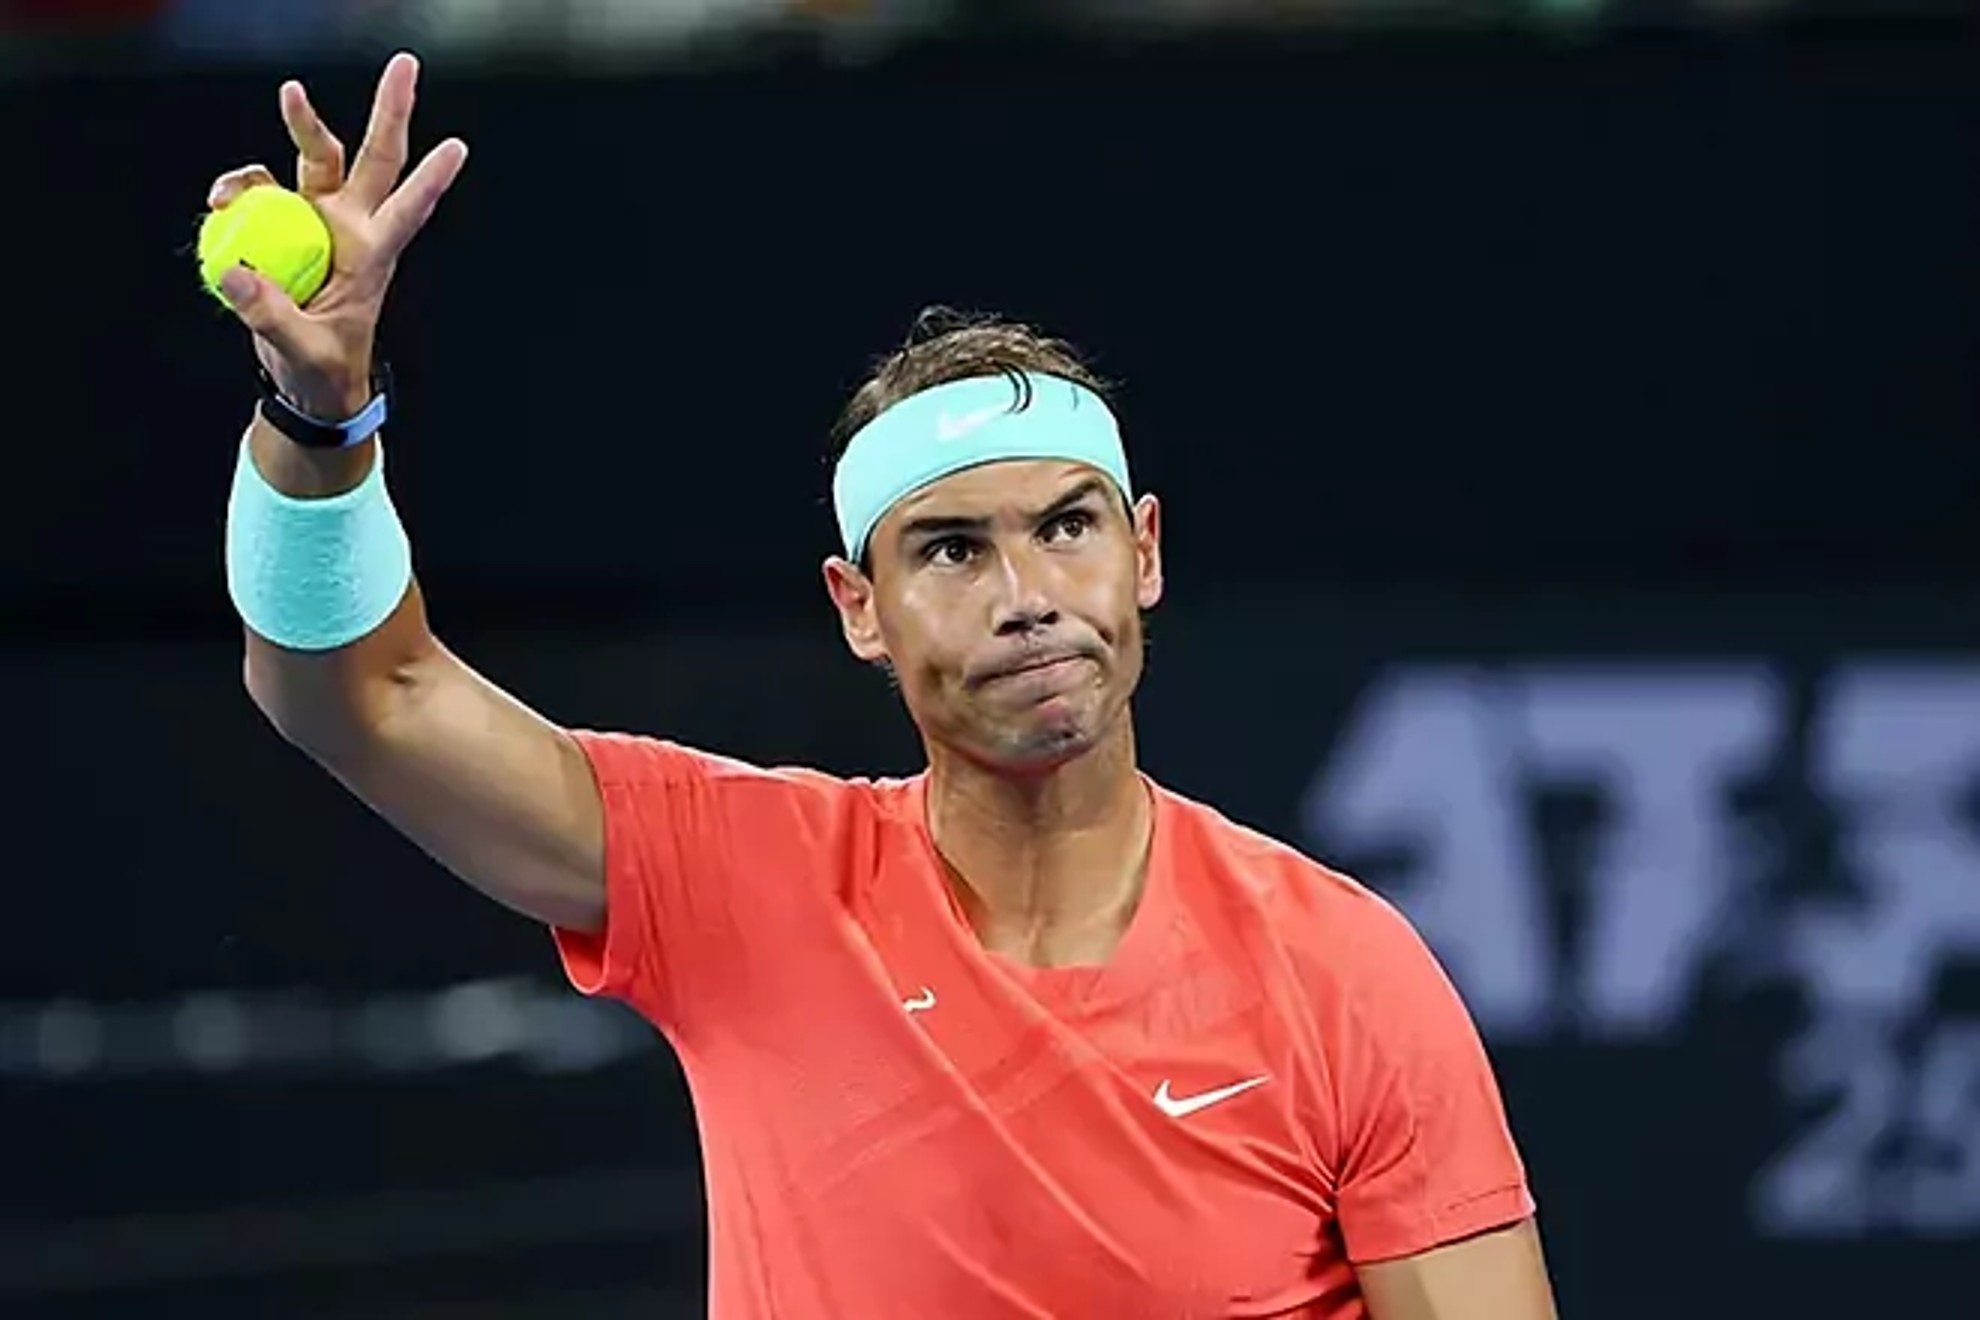 Rafa Nadal nears semi-final in Brisbane but ends with injury against Thompson